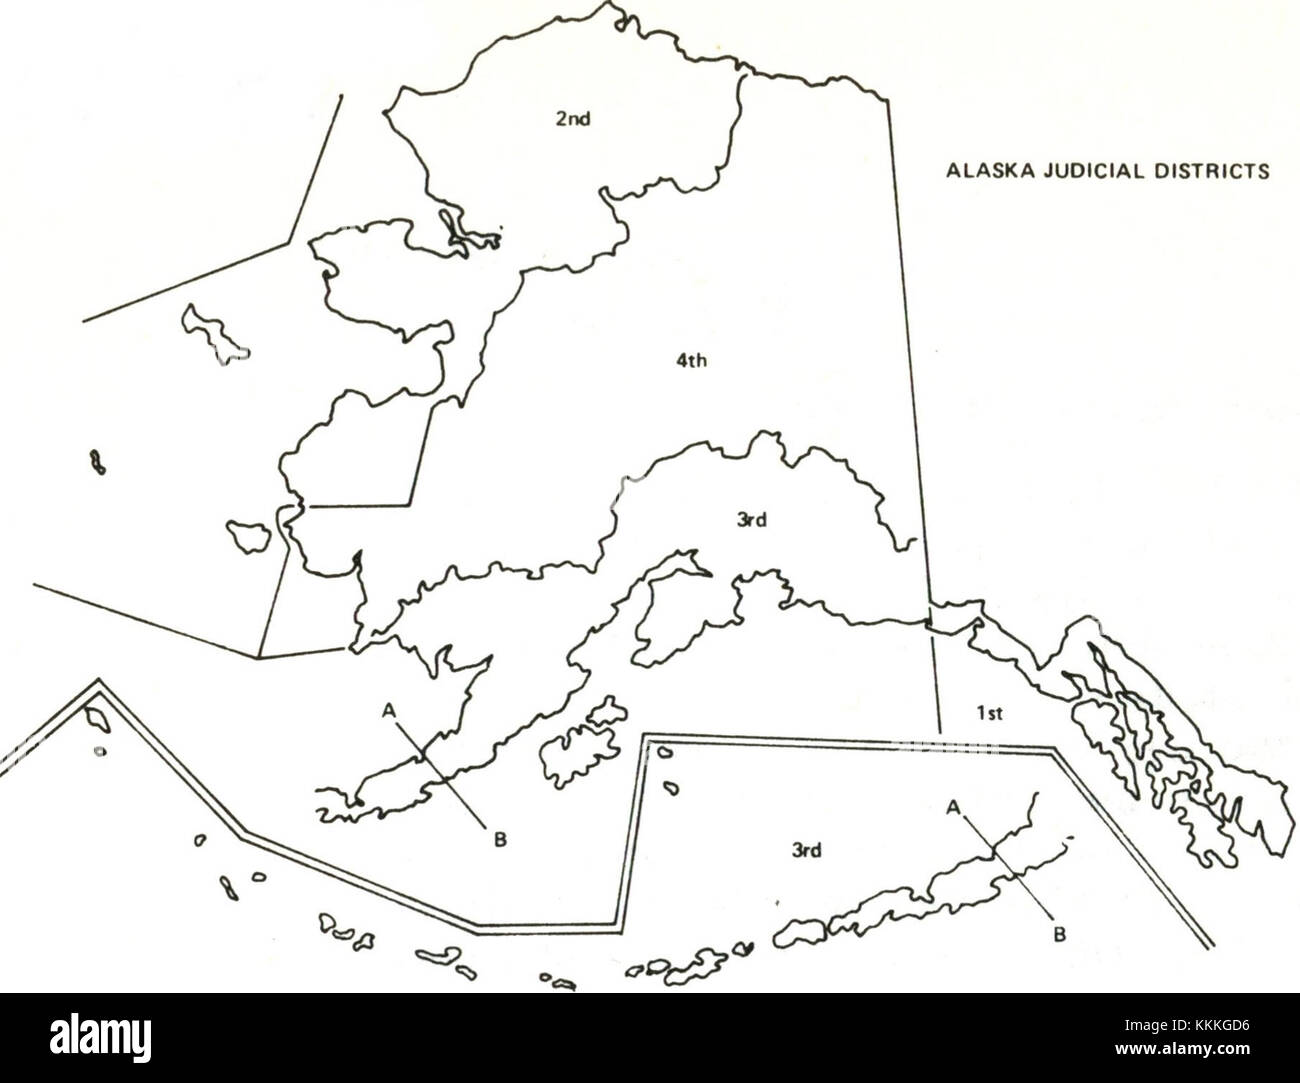 Alaska judicial districts, early 1970s Stock Photo